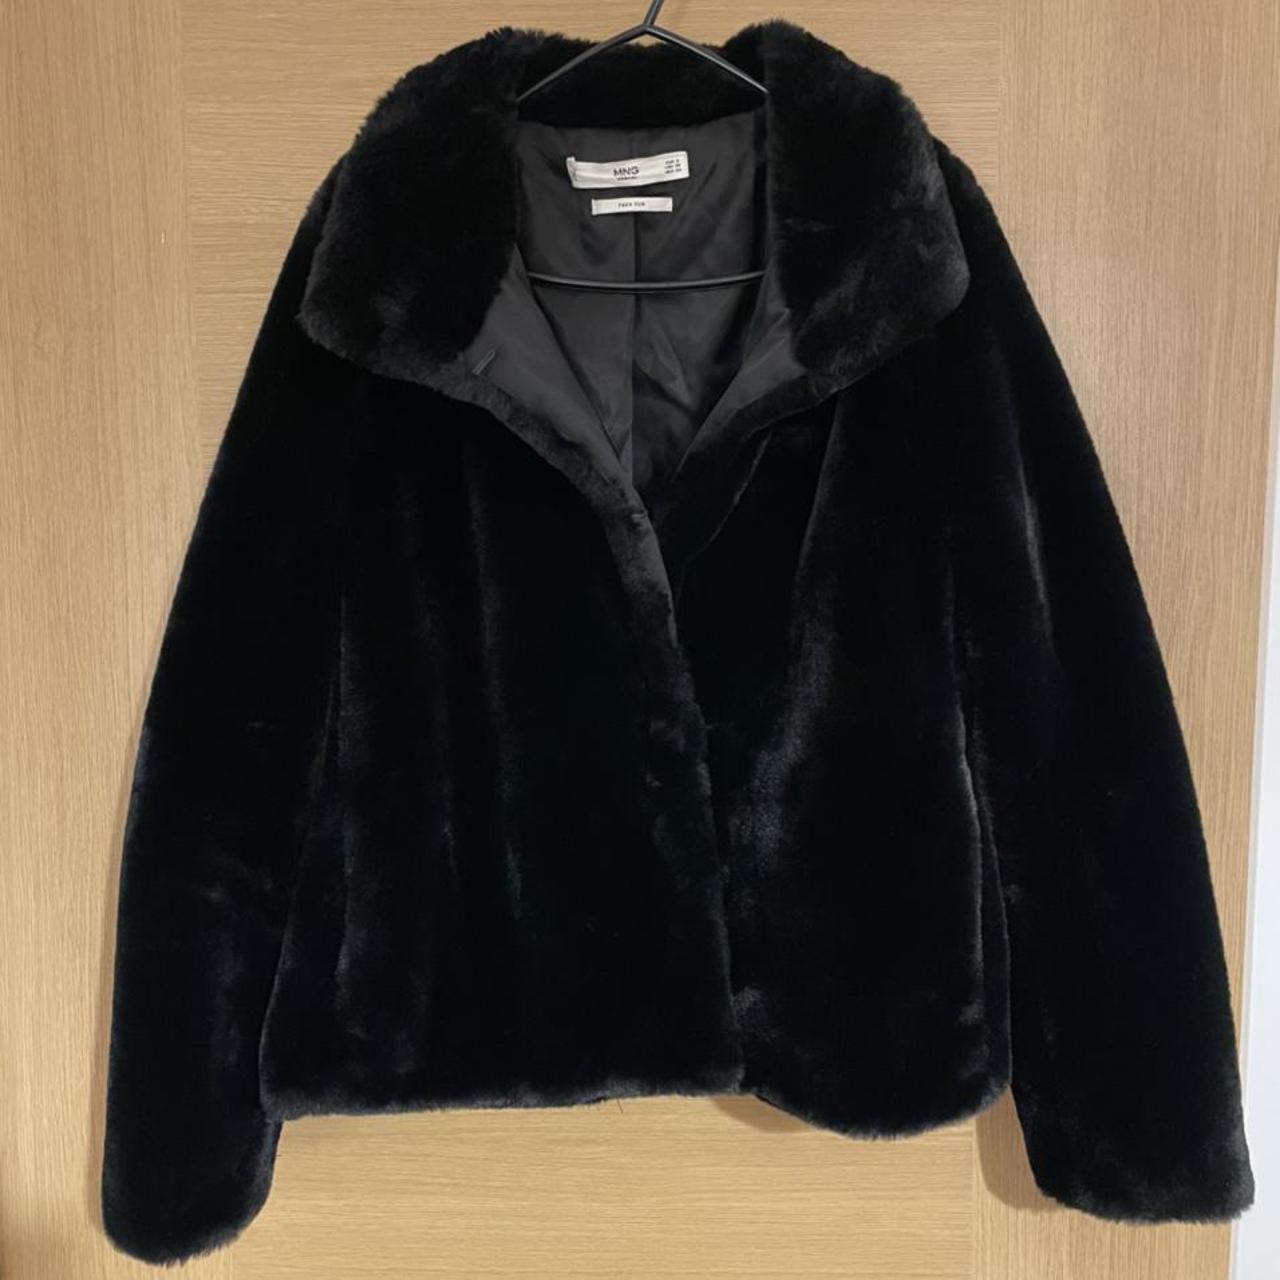 Mango faux fur coat in black, size S. New without... - Depop